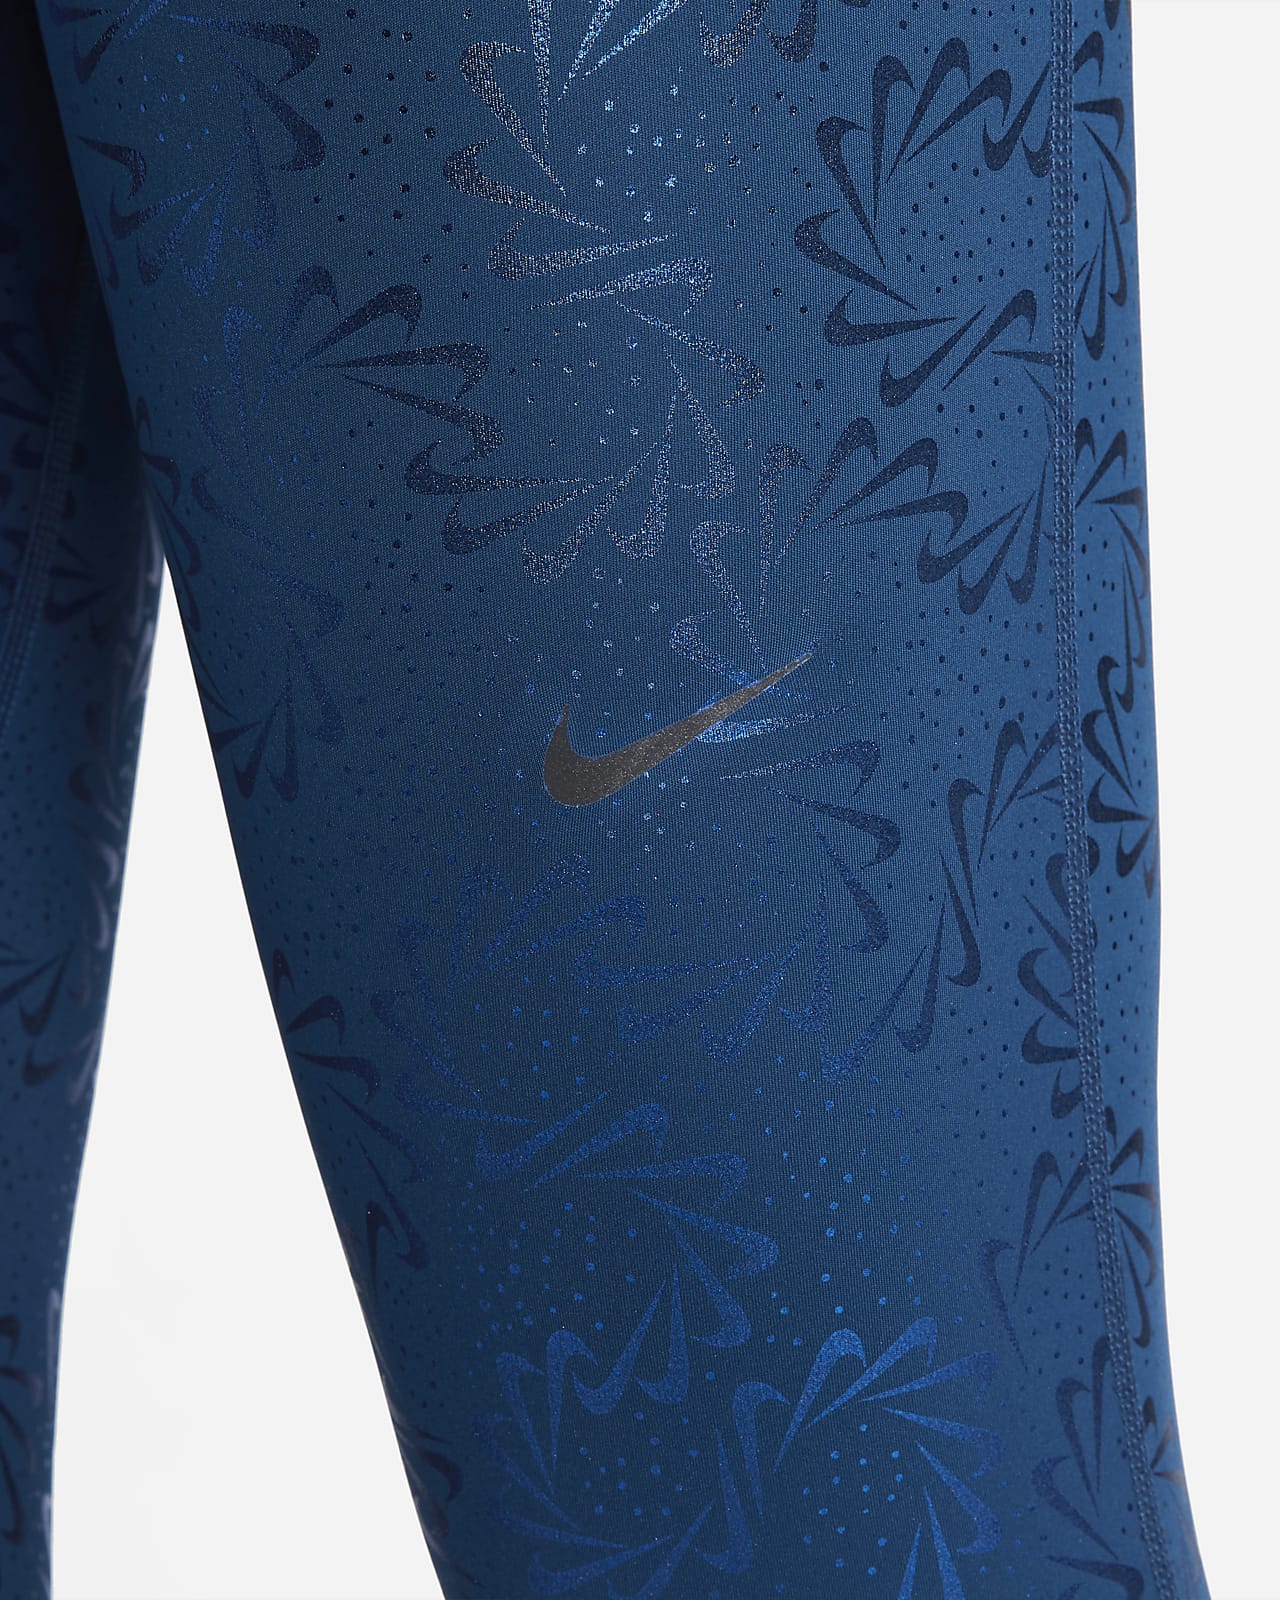 Nike Women's Pro Mid-rise Allover Print Leggings (plus Size) In Black